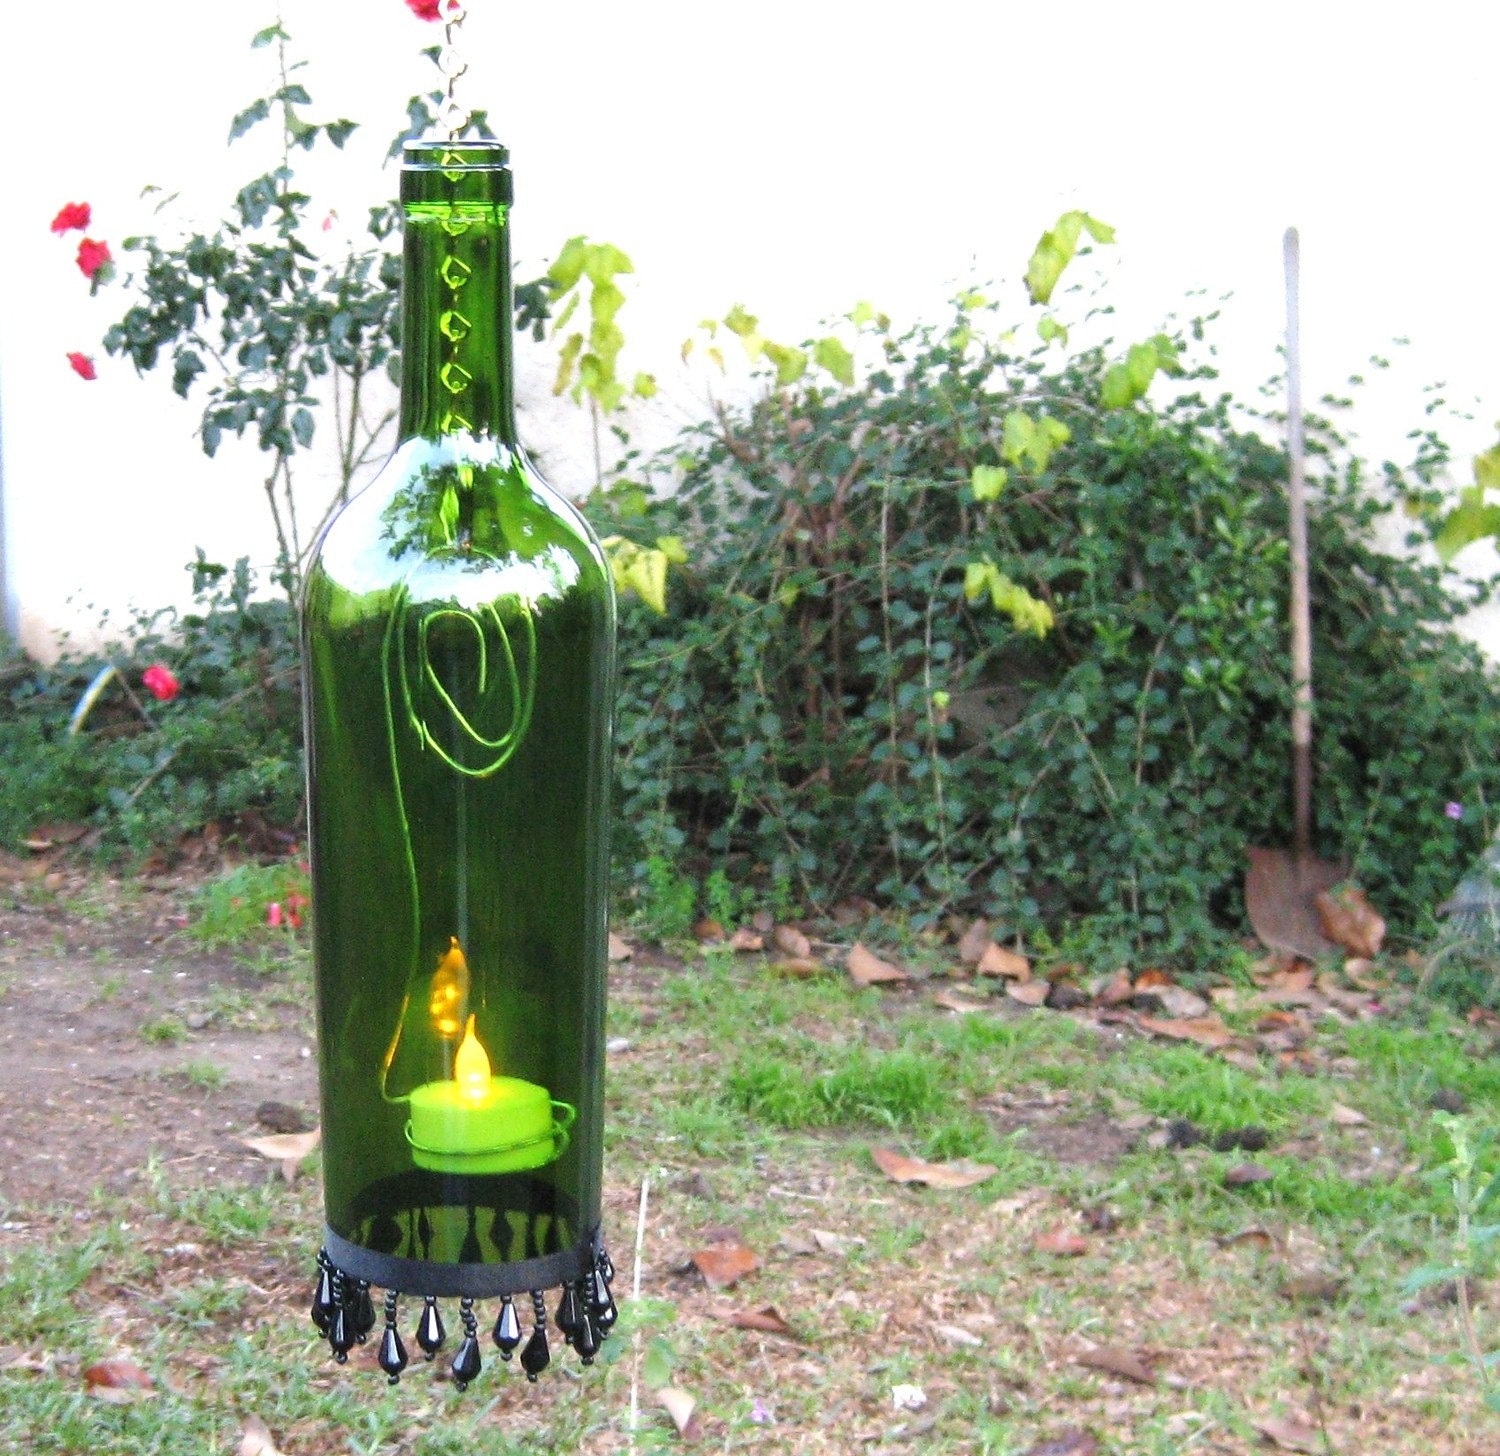 Tags wine bottle garden lantern candle wedding summer outdoors